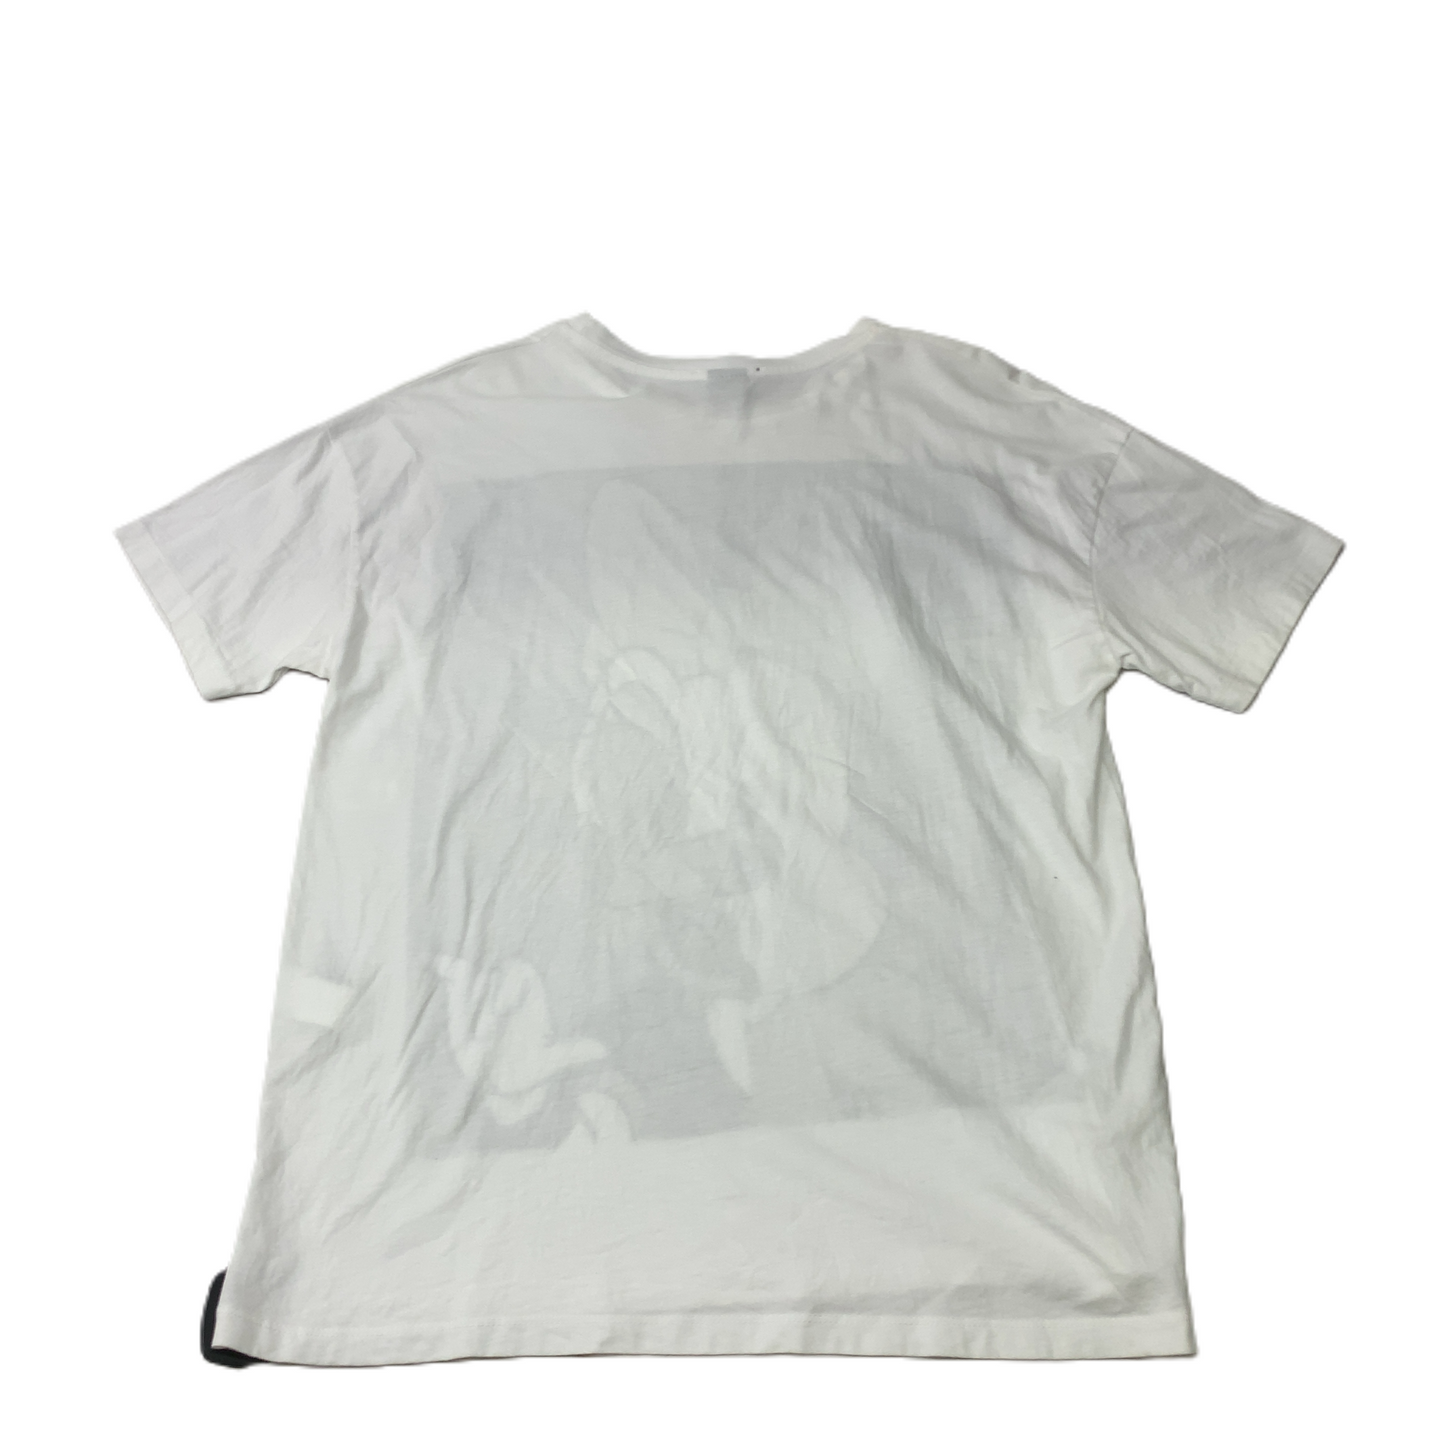 White  Top Short Sleeve By Zara  Size: M